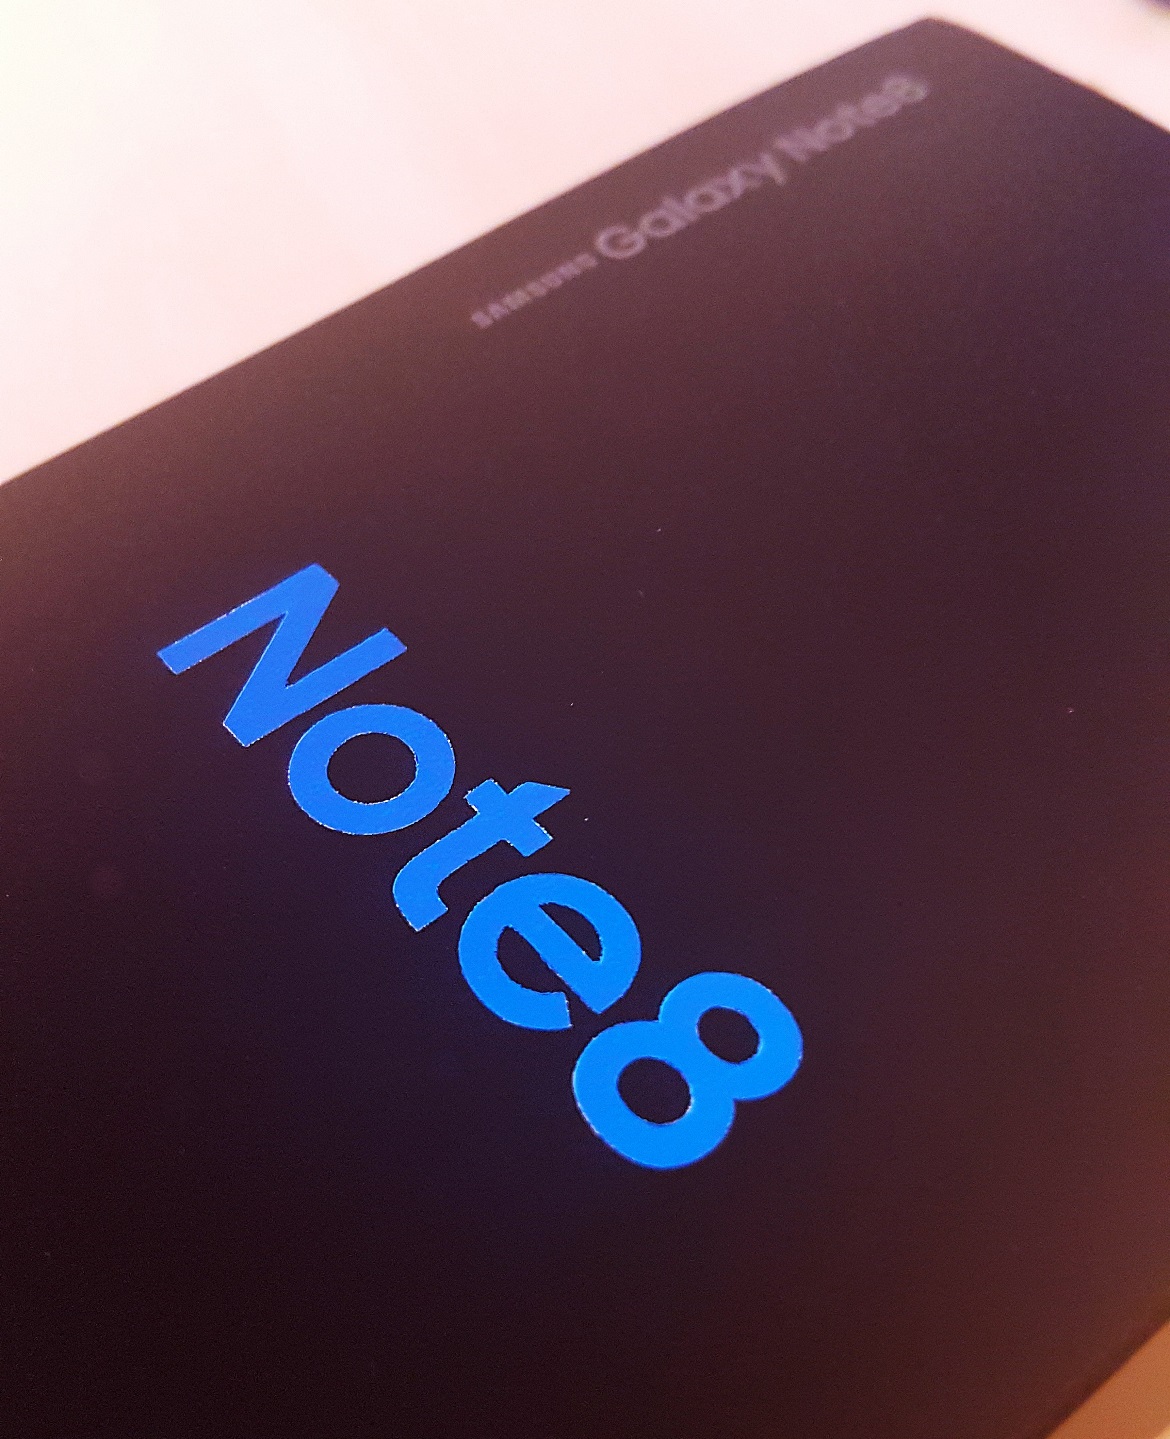 Samsung Galaxy Note 8 - October Monthly Recap by BeckyBecky Blogs